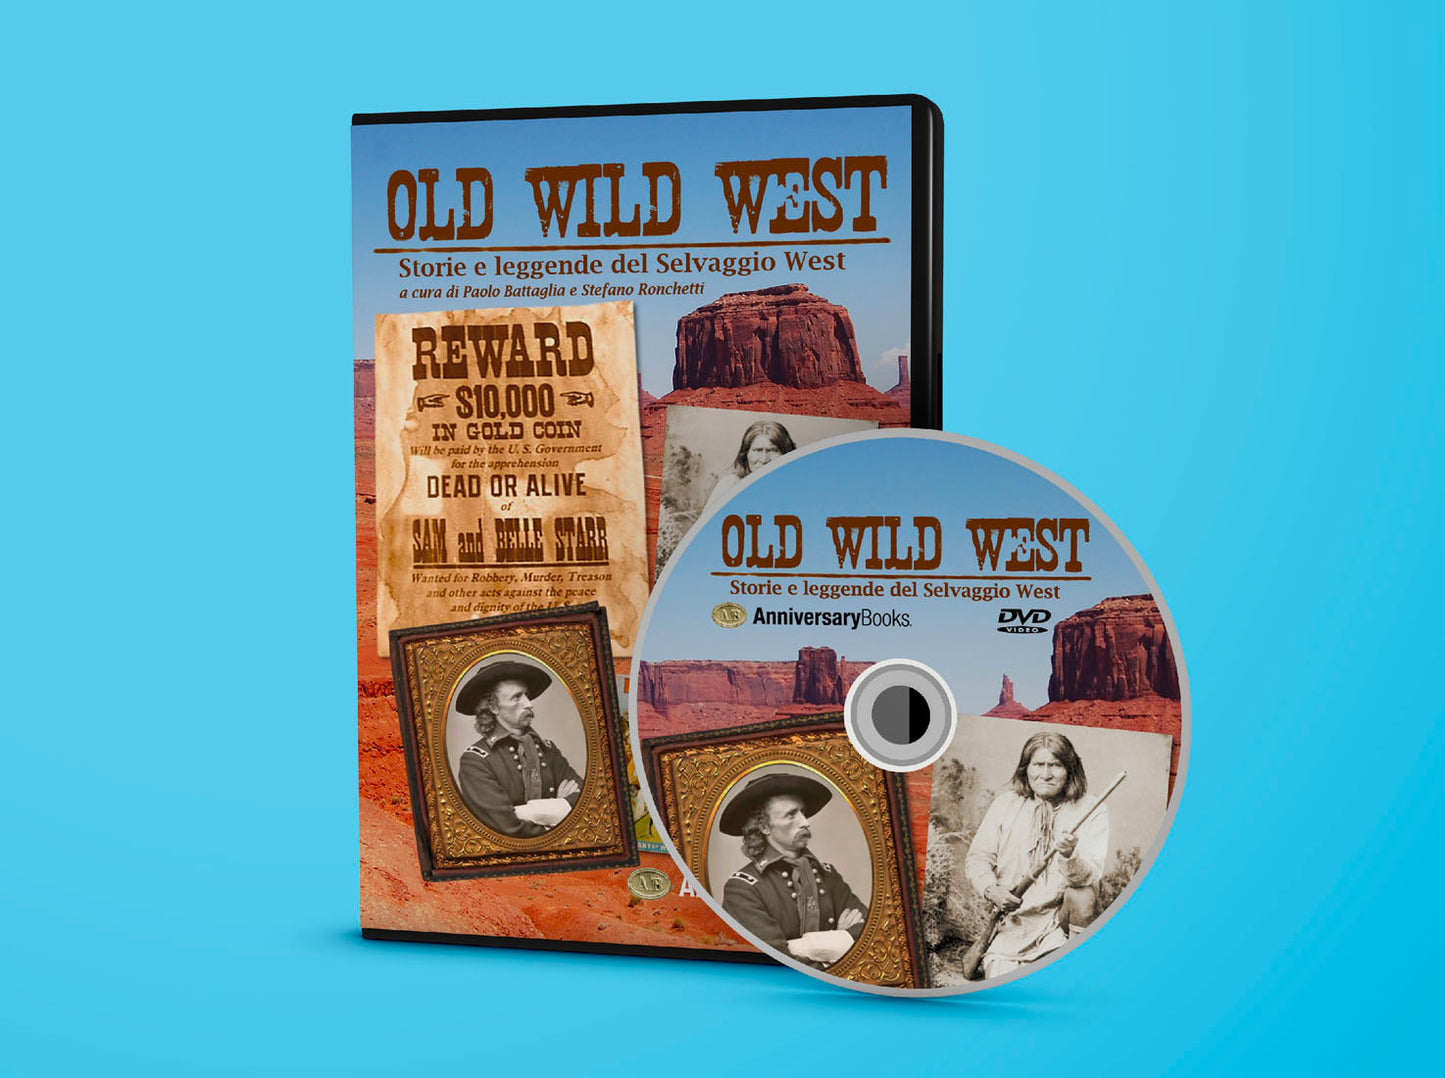 Old Wild West - Storie e leggende del Selvaggio West